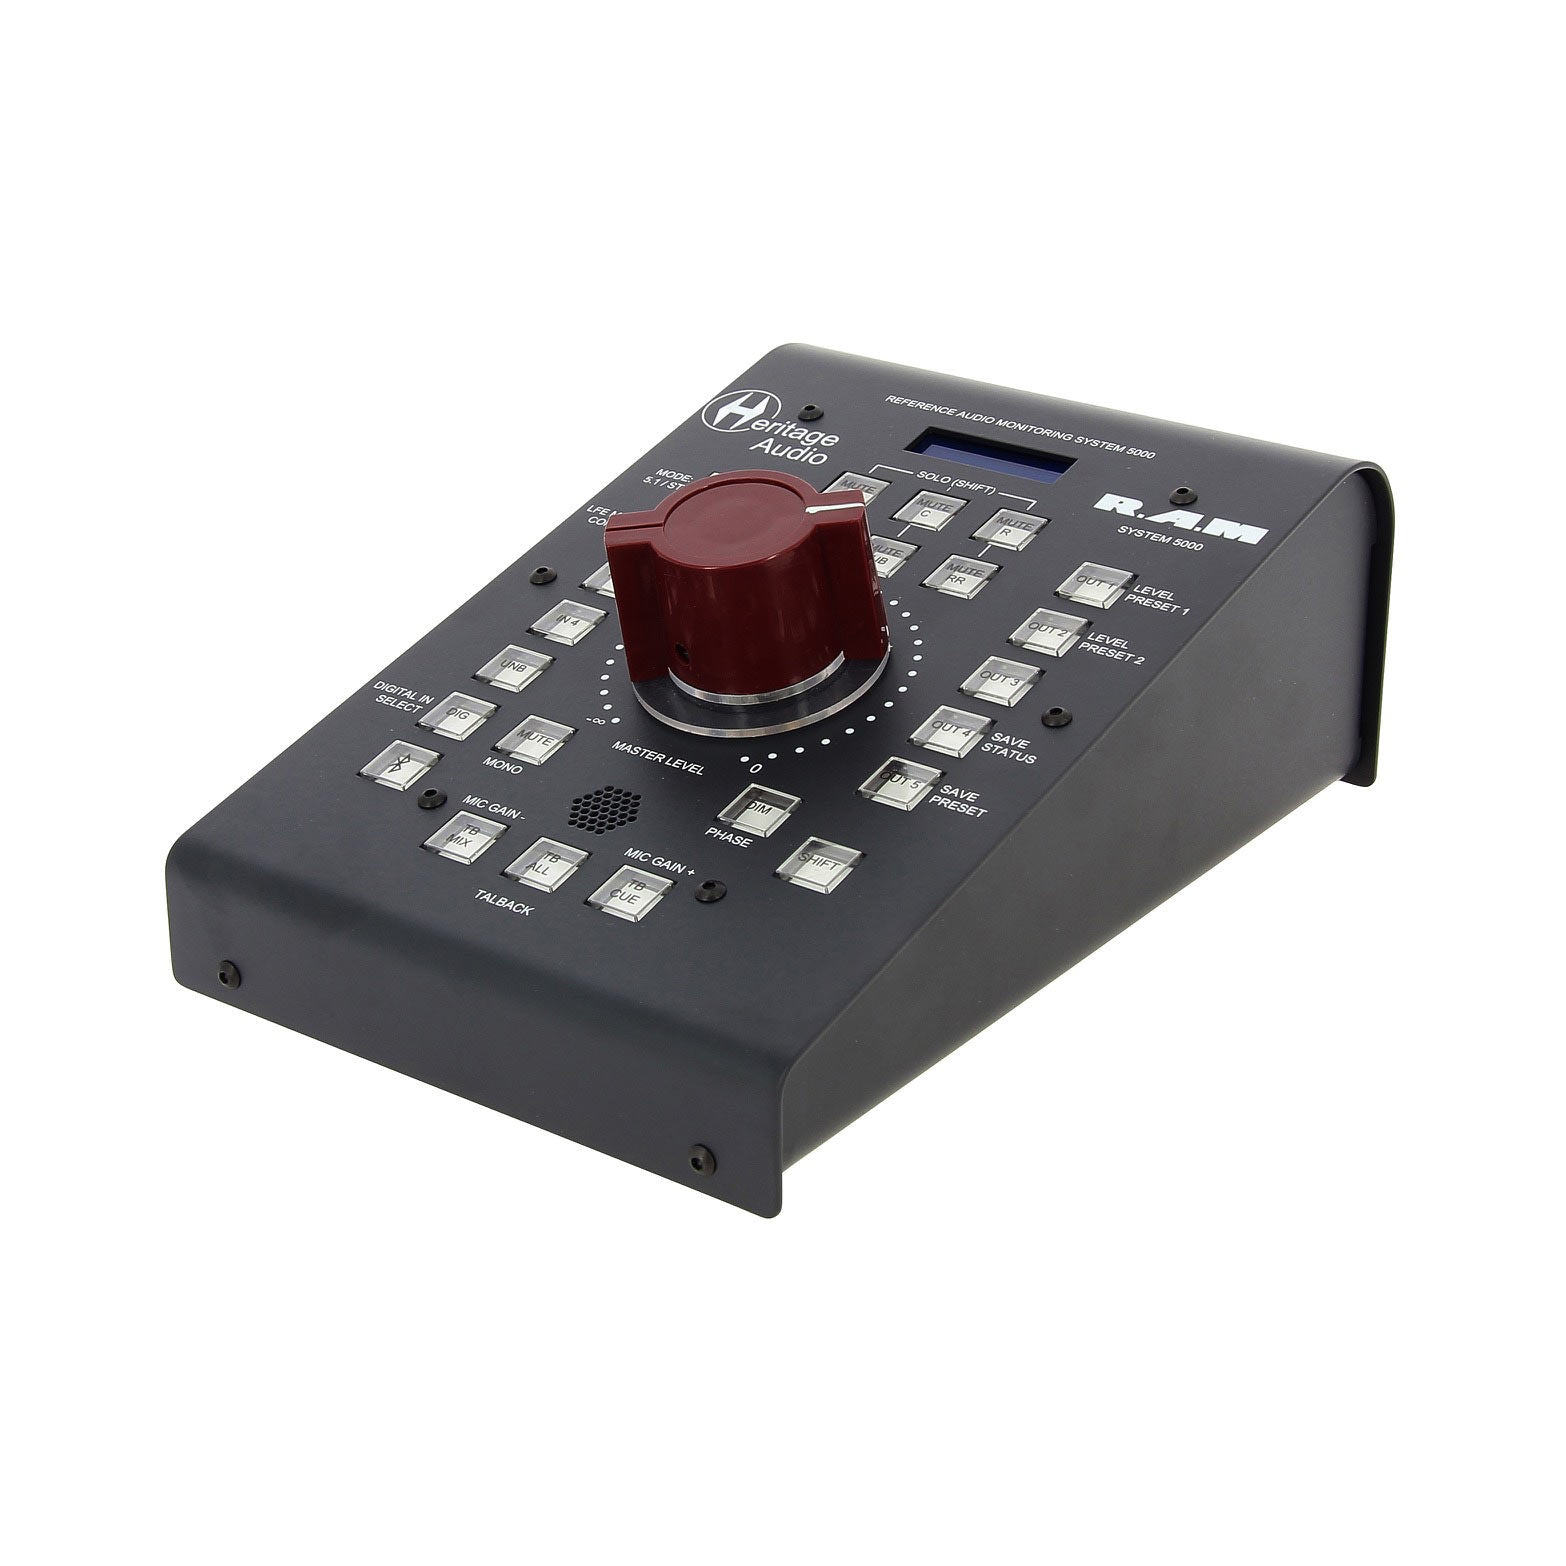 Heritage Audio  RAM System 5000 - 5000 5.1 Rackmount Monitoring System